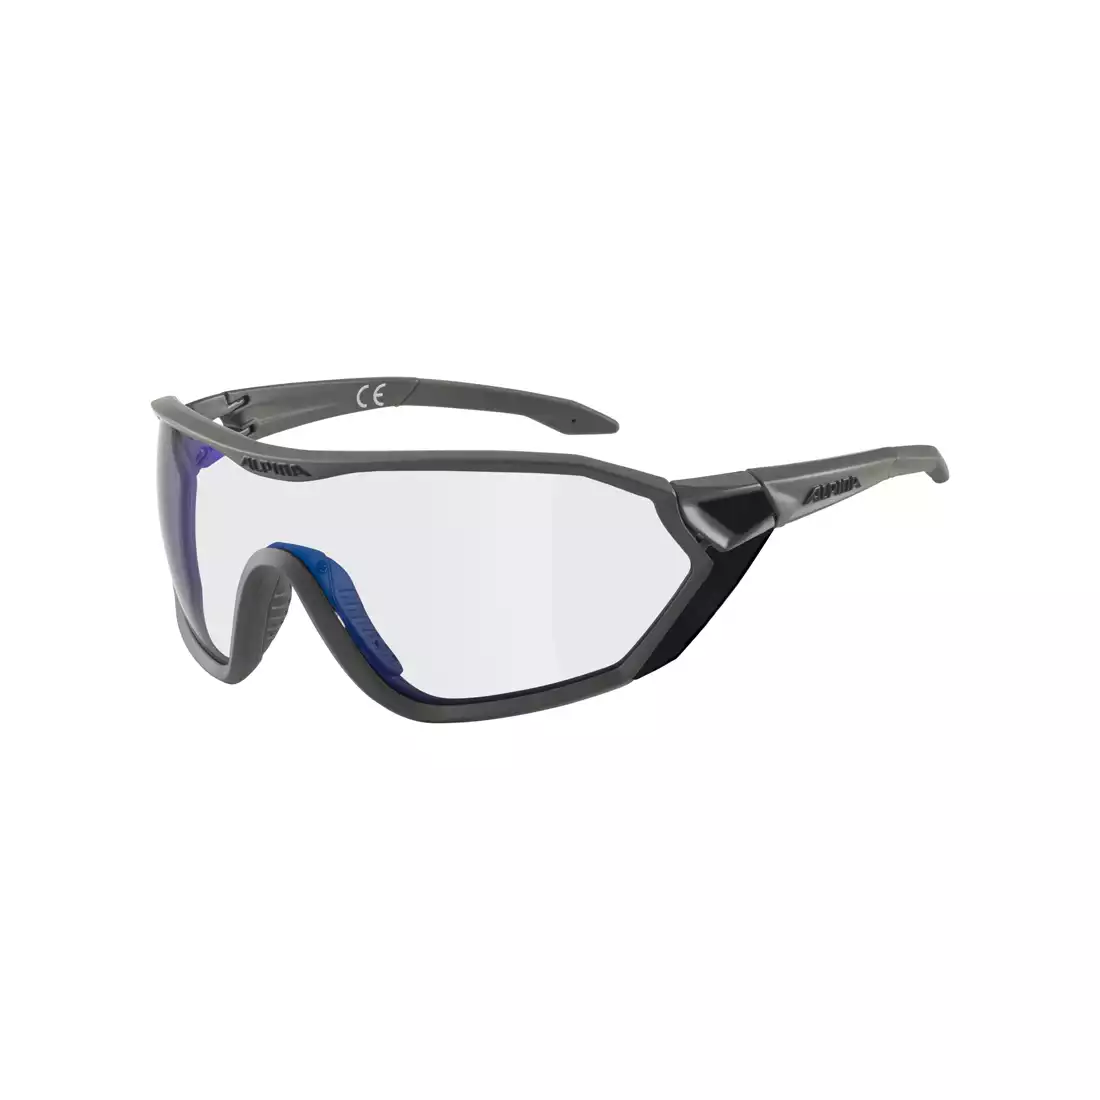 ALPINA S-WAY VM Okulary sportowe fotochromowe, moon-grey matt, blue mirrorr